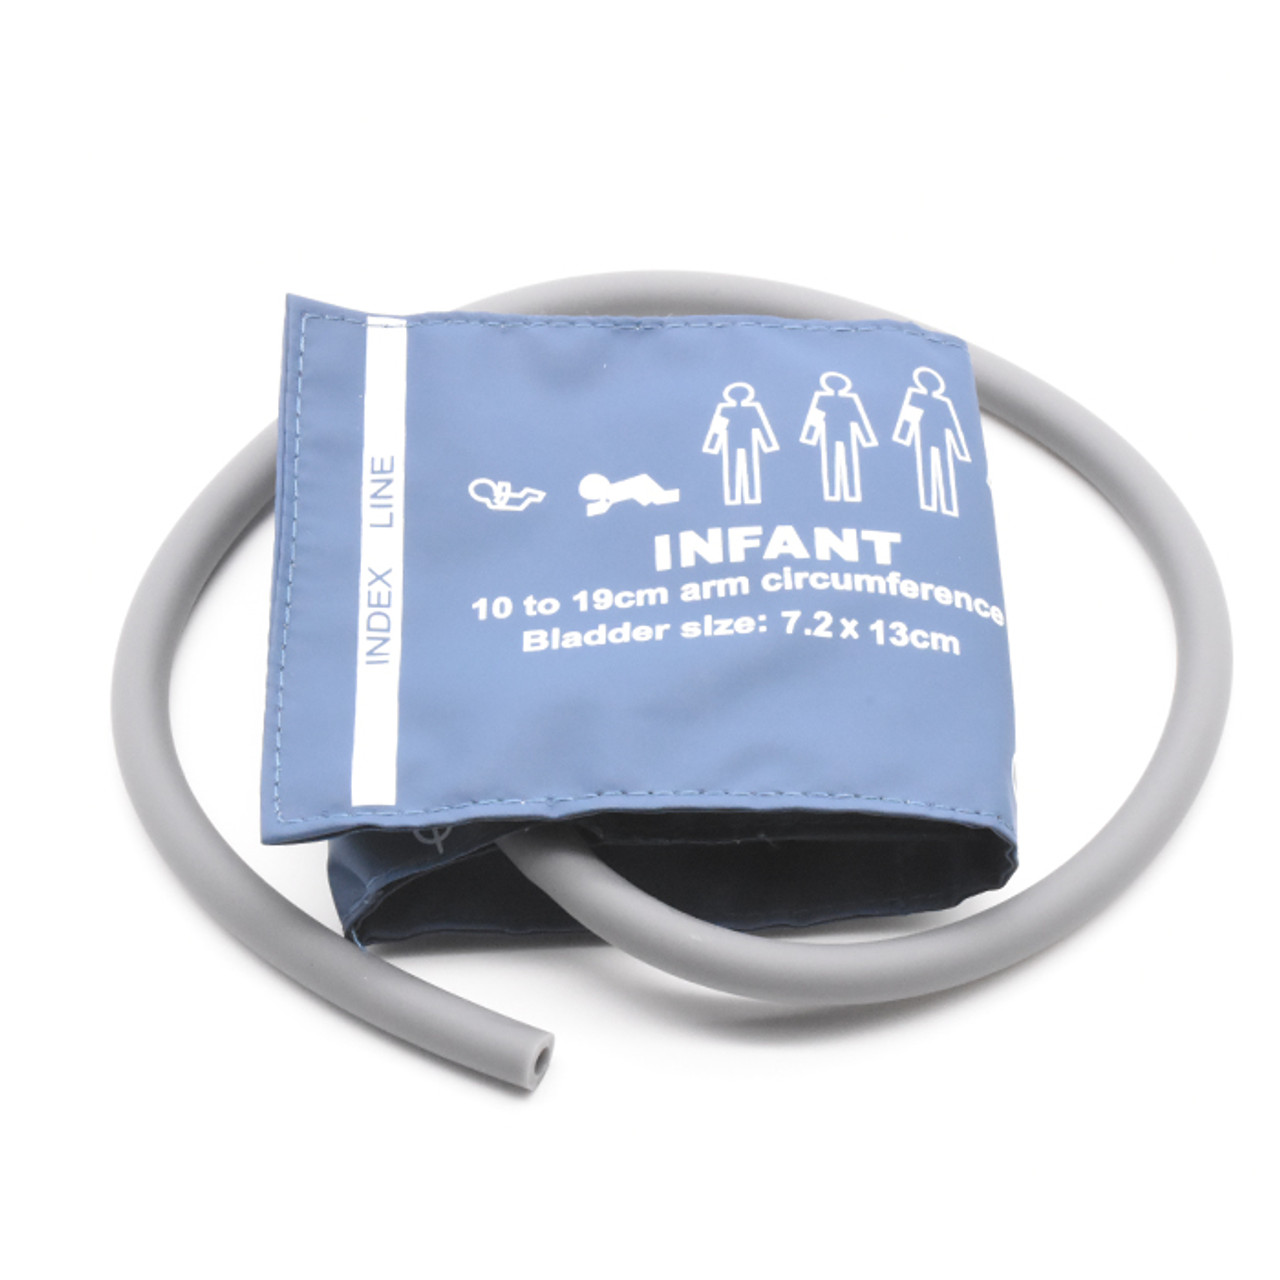 NIBP Reusable Cuff Blood Pressure Single Hose - Pediatric - Medical Cable  Source